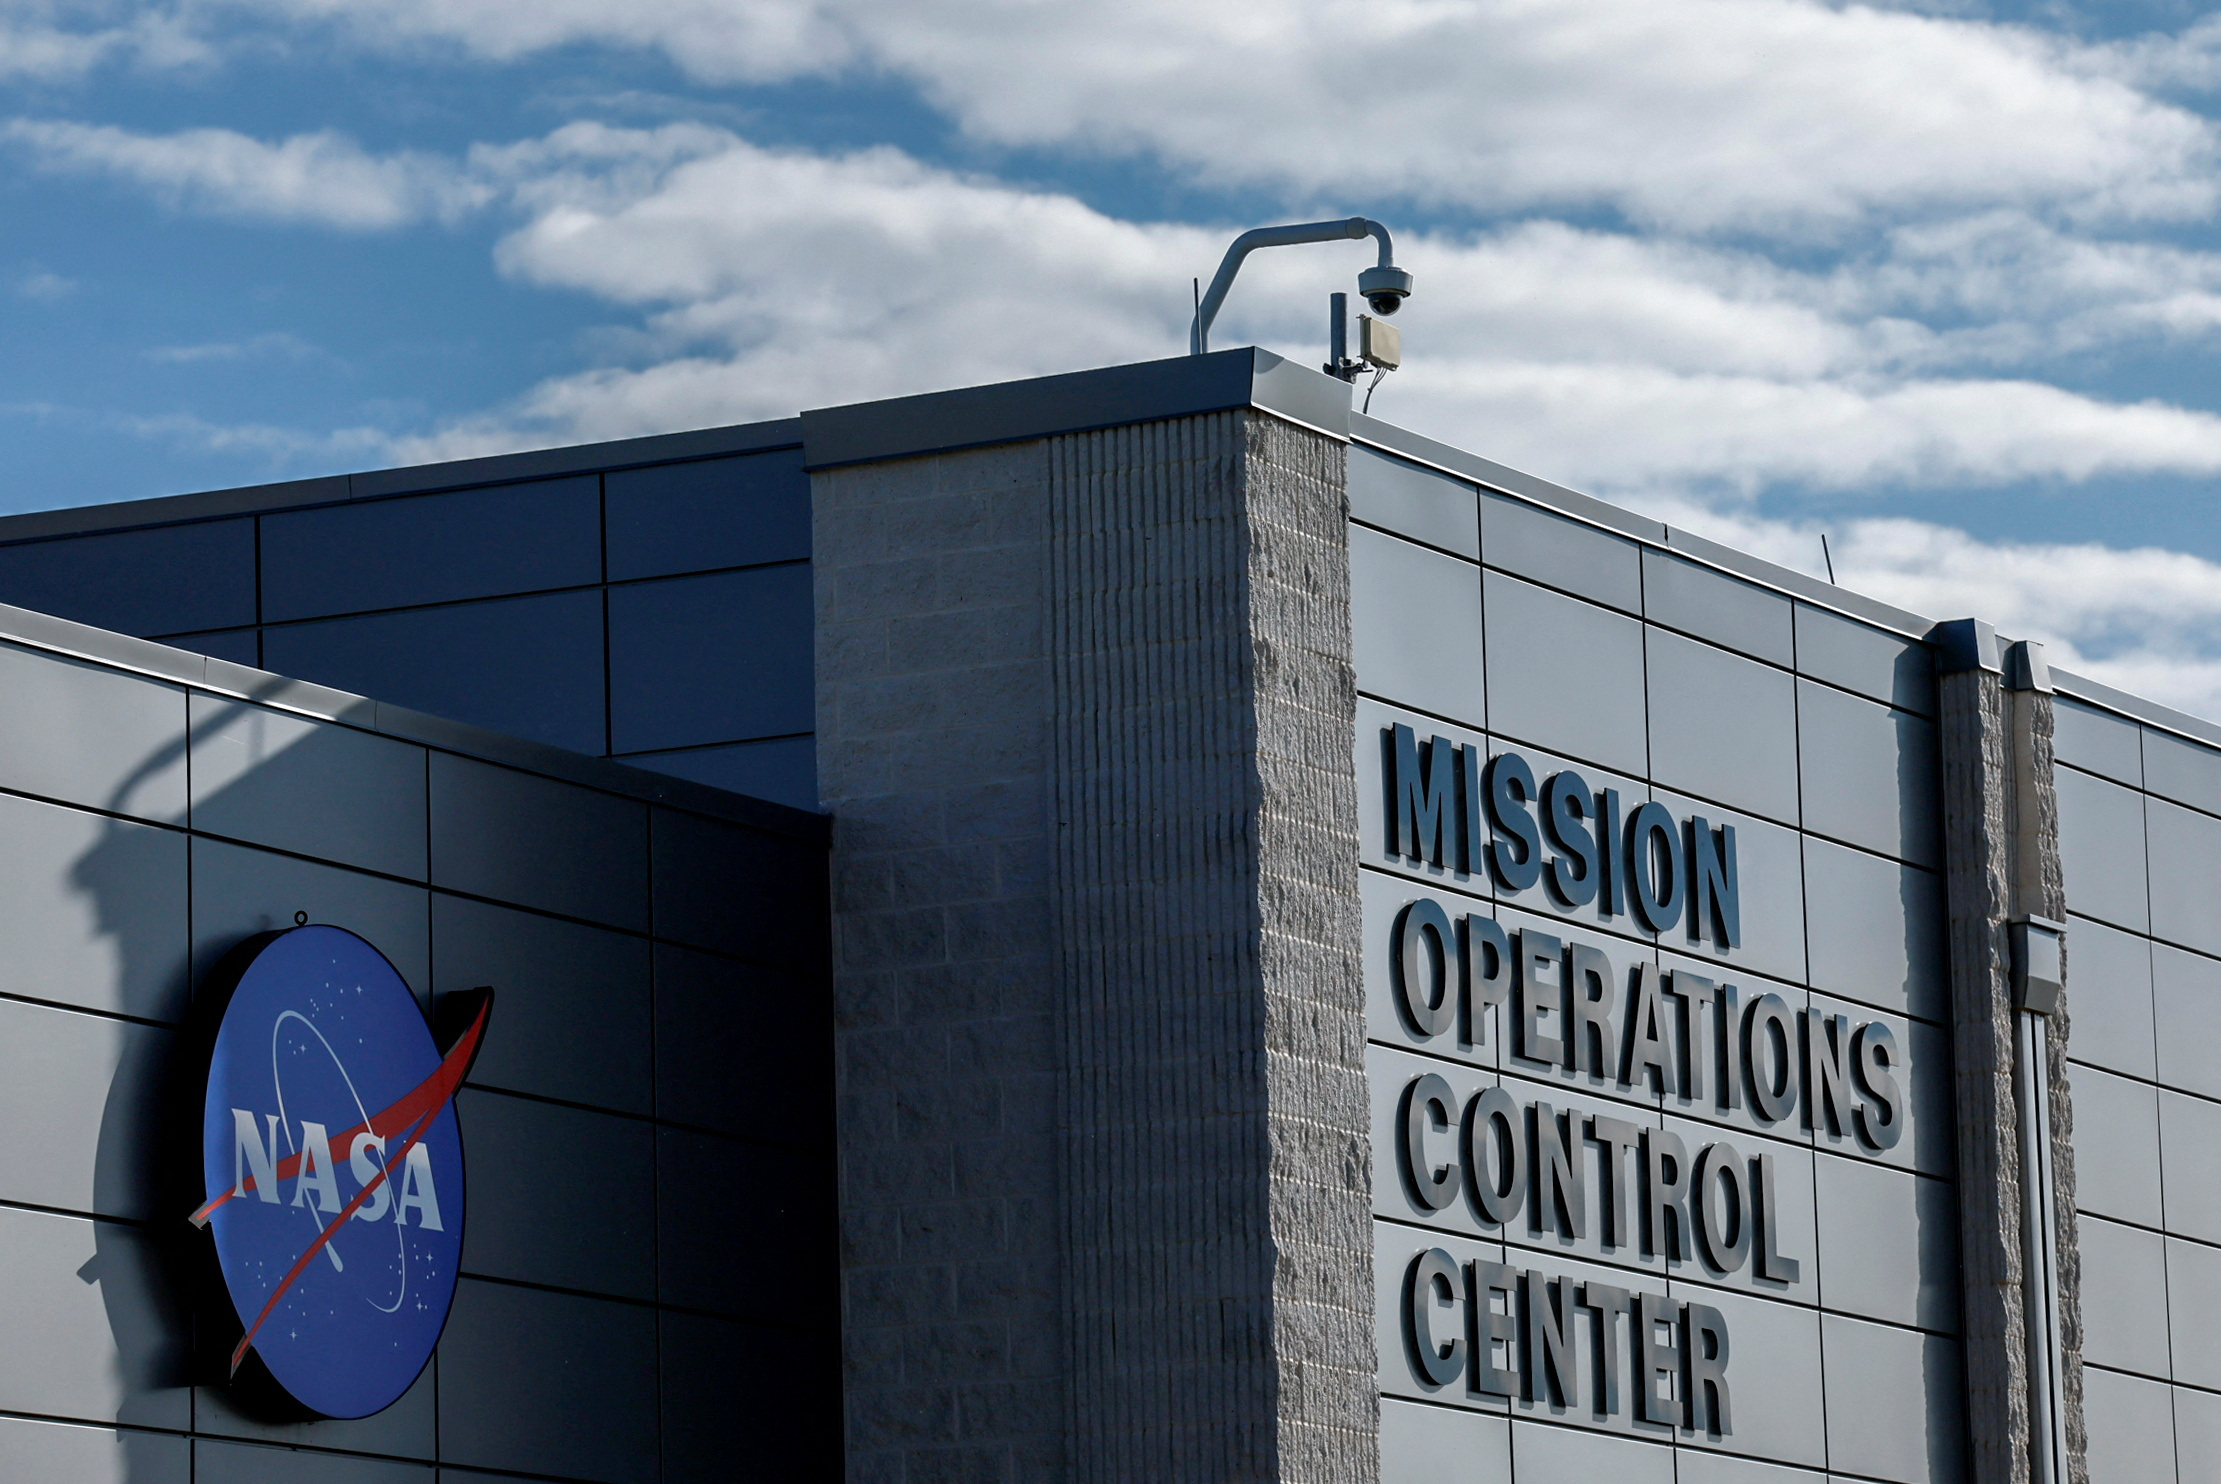 NASA's Operations Control Center on Wallops Island, Virginia (REUTERS / Evelyn Hockstein)